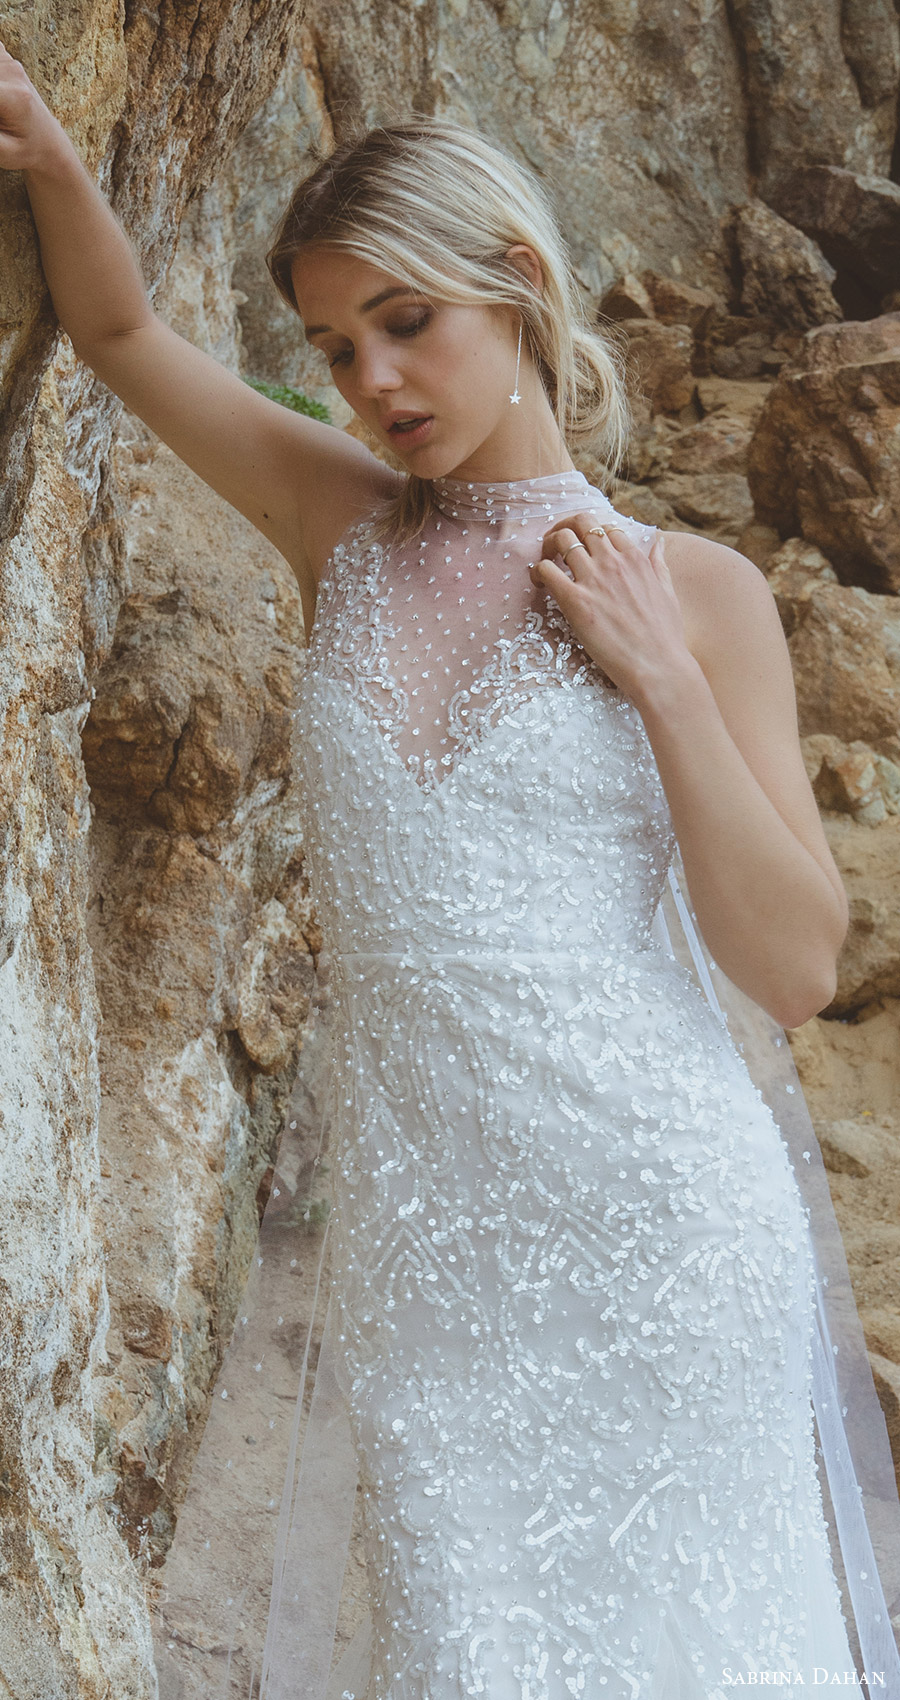 sabrina dahan spring 2018 bridal sleeveless illusion high neck heavily embellished trumpet wedding dress godet skirt (lorainne) zfv romantic elegant